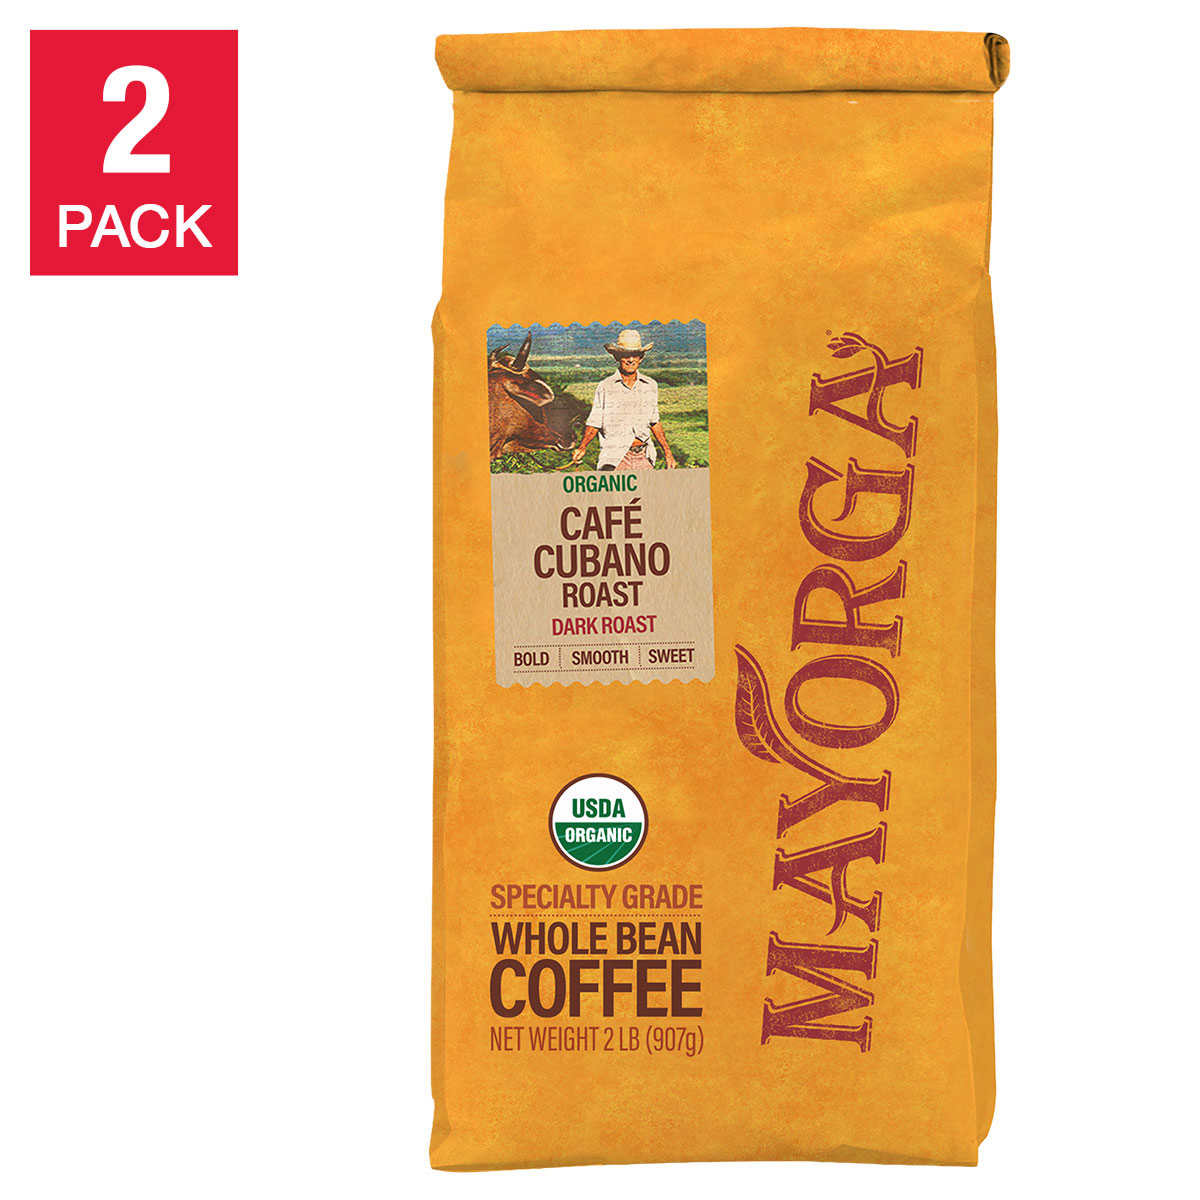 Mayorga Organic Café Cubano Roast, USDA Organic, Dark Roast, Whole Bean Coffee, 2lbs, 2-pack